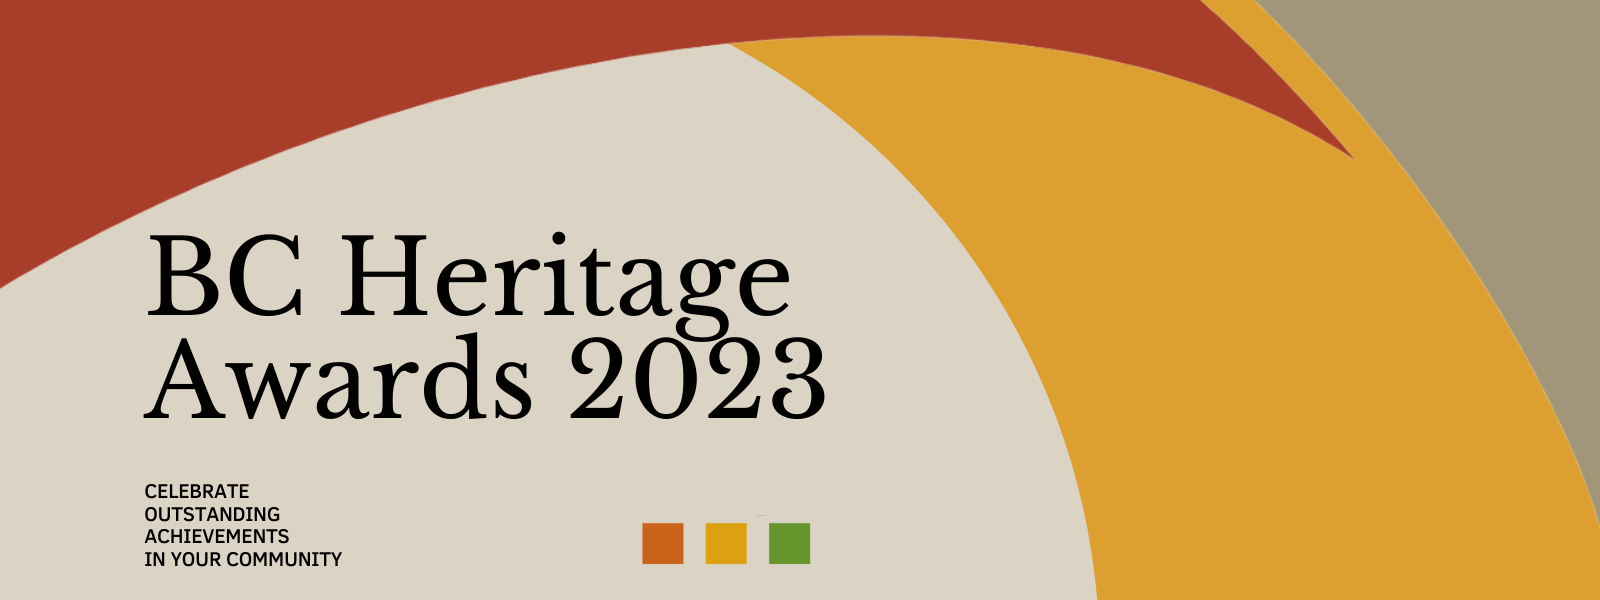 BC Heritage Awards 2023 Banner